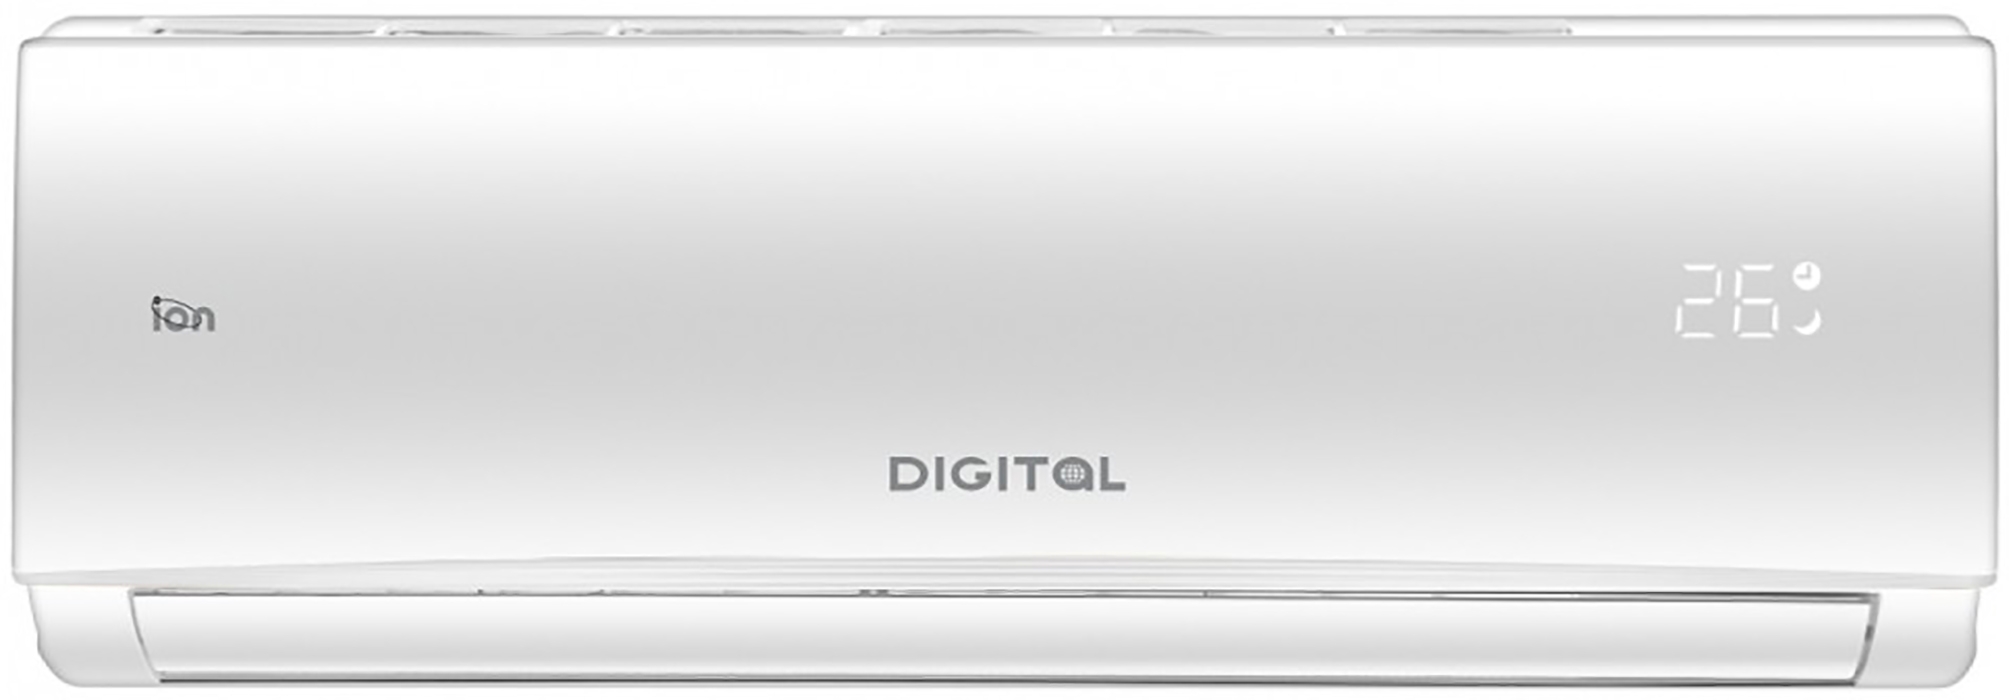 Кондиционер сплит-система Digital DAC-i18SWT (Wi-Fi ready) цена 0 грн - фотография 2